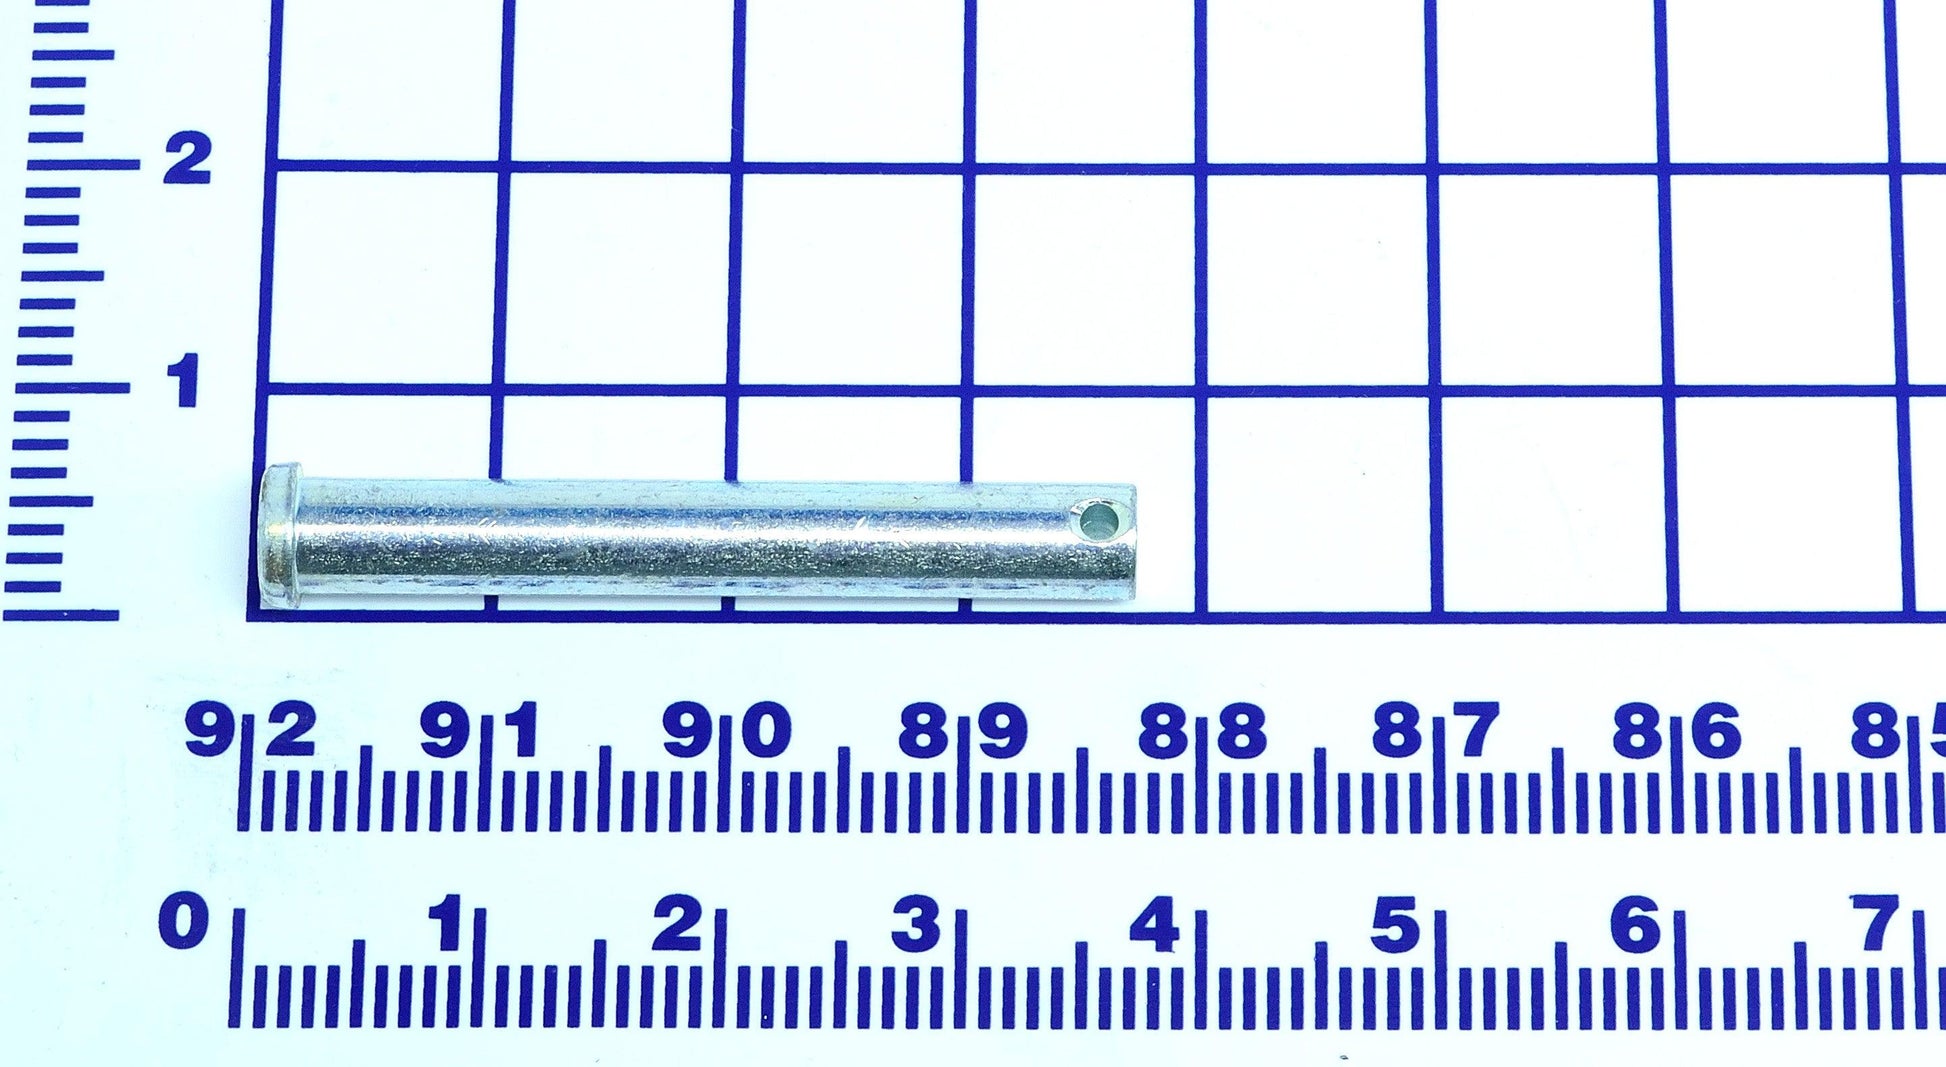 MF4-144-000 Rig Sensor Pin Assembly - Nova